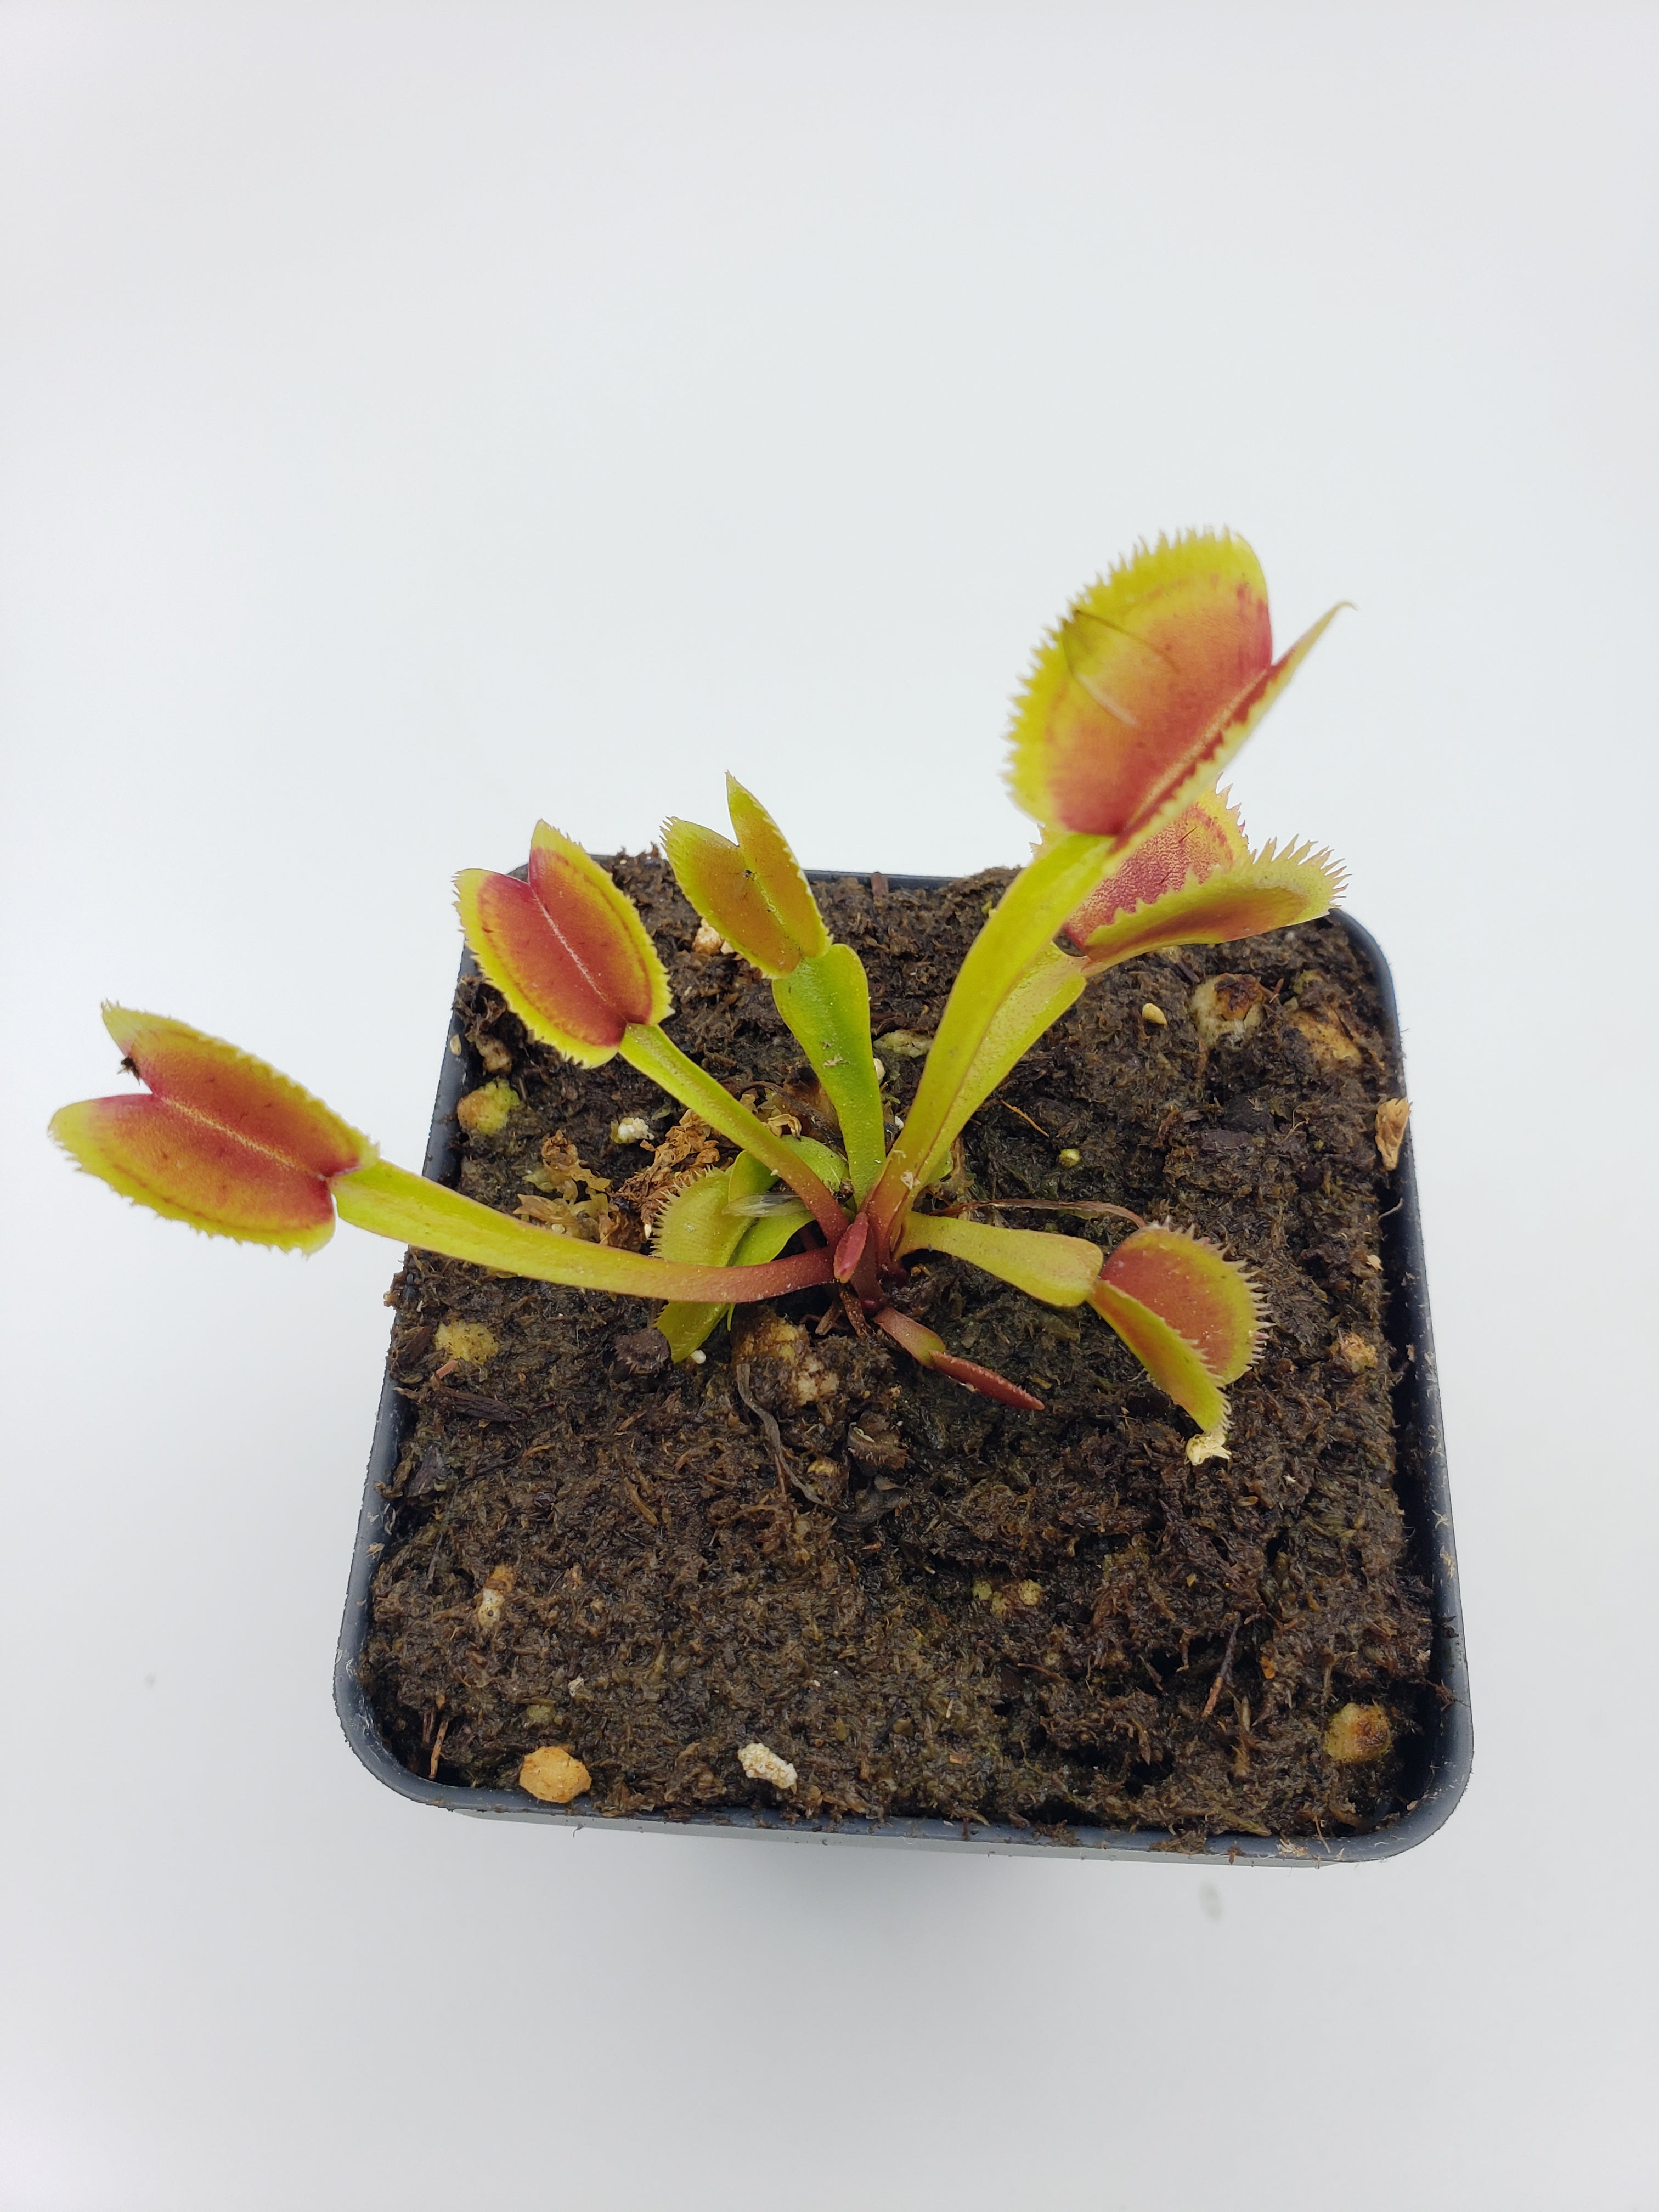 Venus flytrap (Dionaea muscipula) "Brutal Shark" - Rainbow Carnivorous Plants LLC